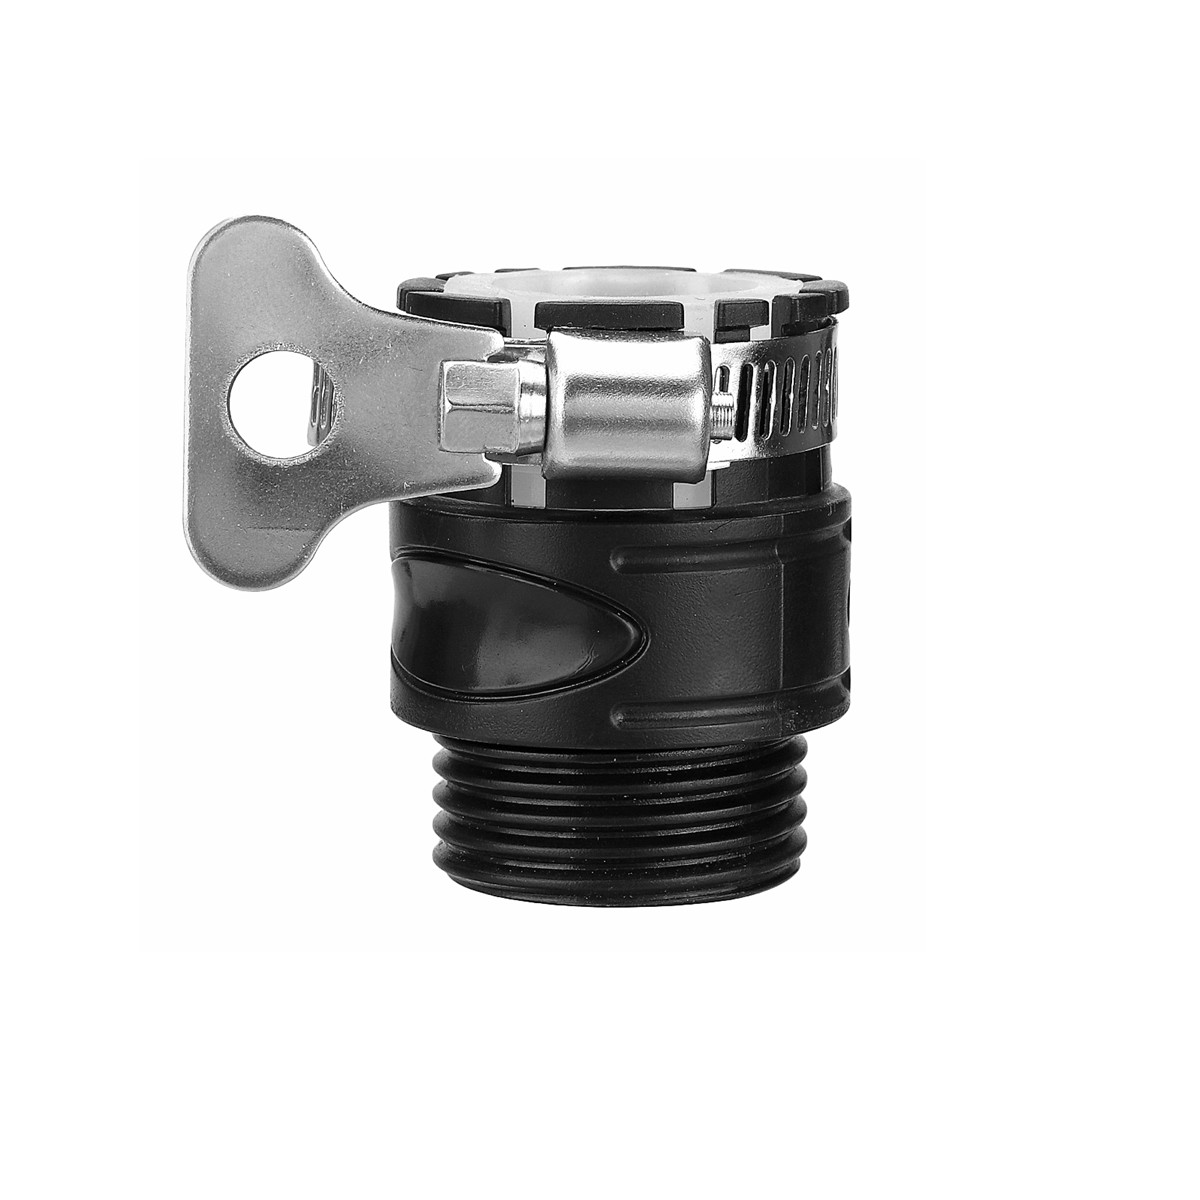 NASUM-402M-Automatic-Sprinkler-DIY-Garden-Watering-Micro-Drip-Irrigation-System-Hose-Kits-1891179-32